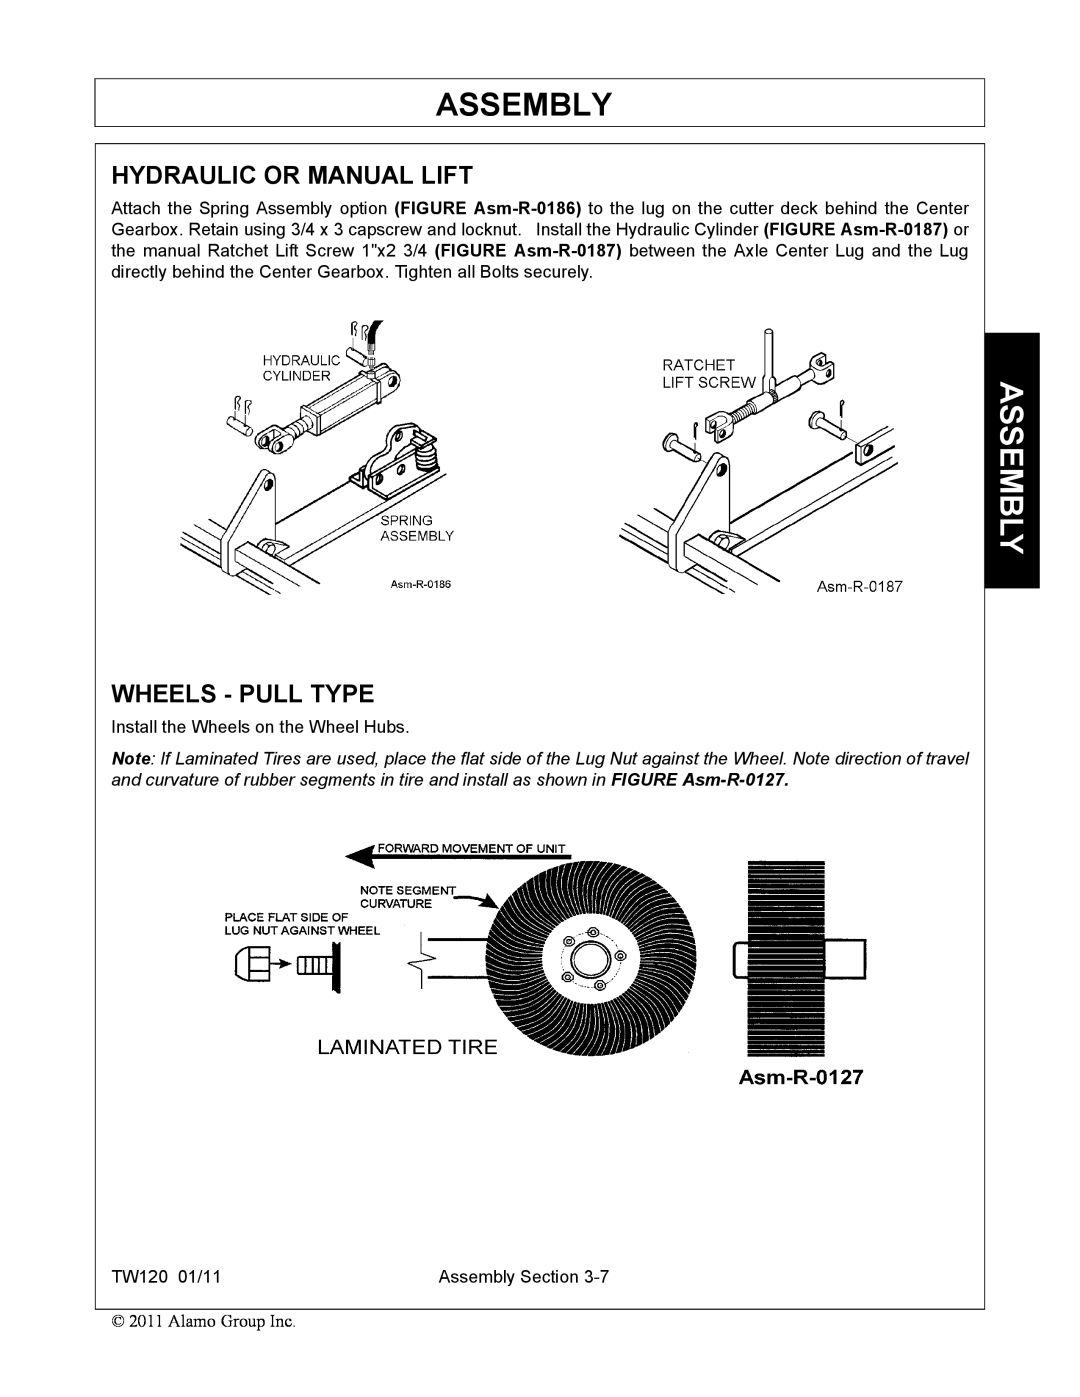 Blue Rhino FC-0025, FC-0024 manual Hydraulic Or Manual Lift, Wheels - Pull Type, Assembly 